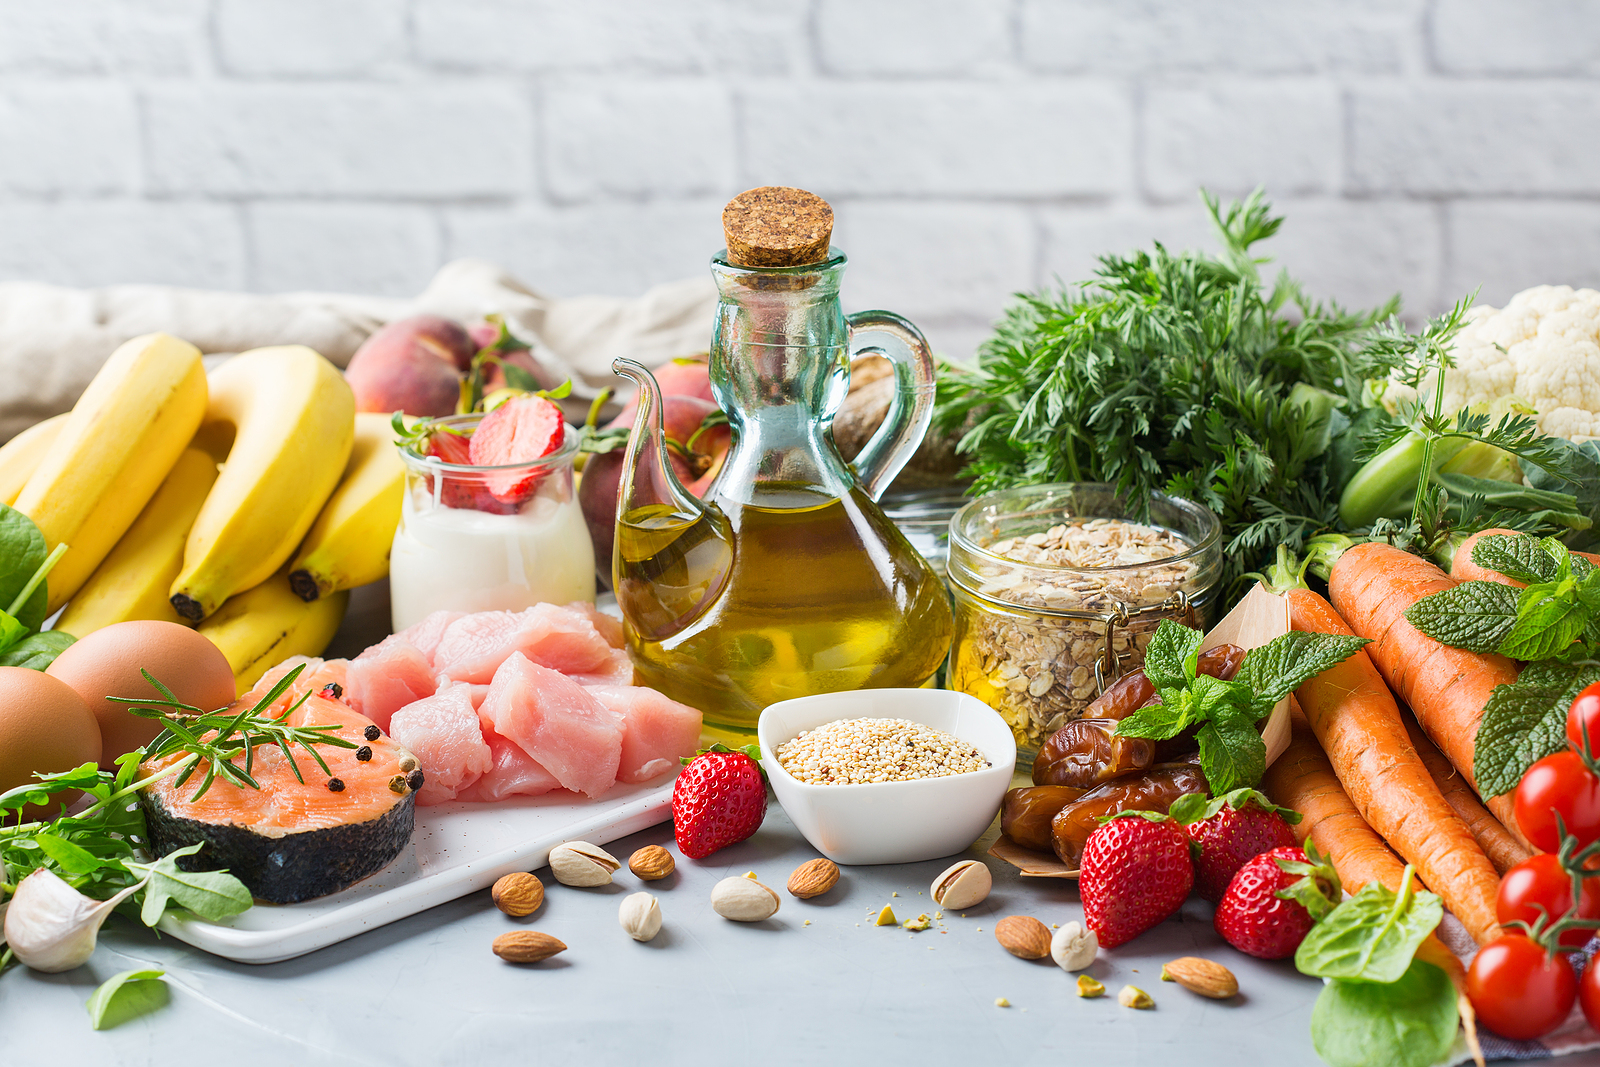 Foods part of the Mediterranean diet like vegetables, fruits, legumes, nuts